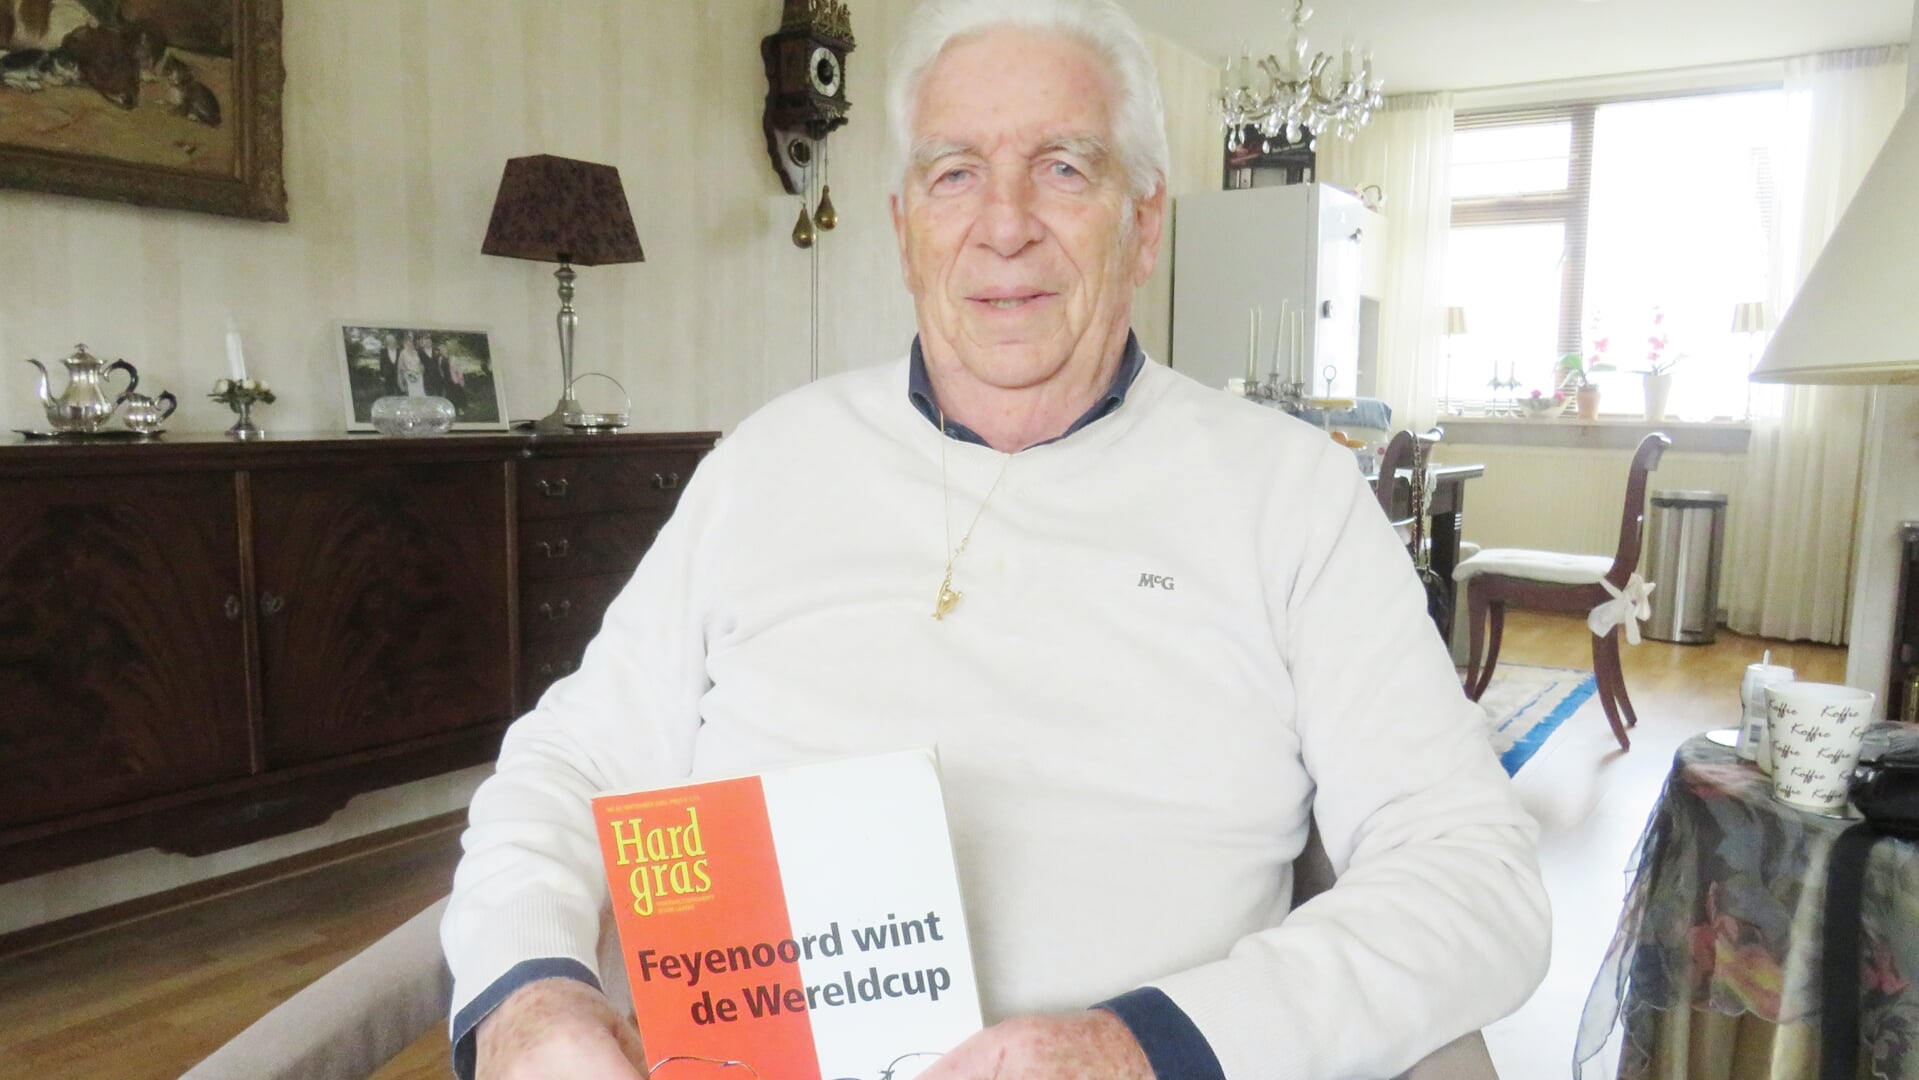 Guus Haak thuis met boek Feijenoord